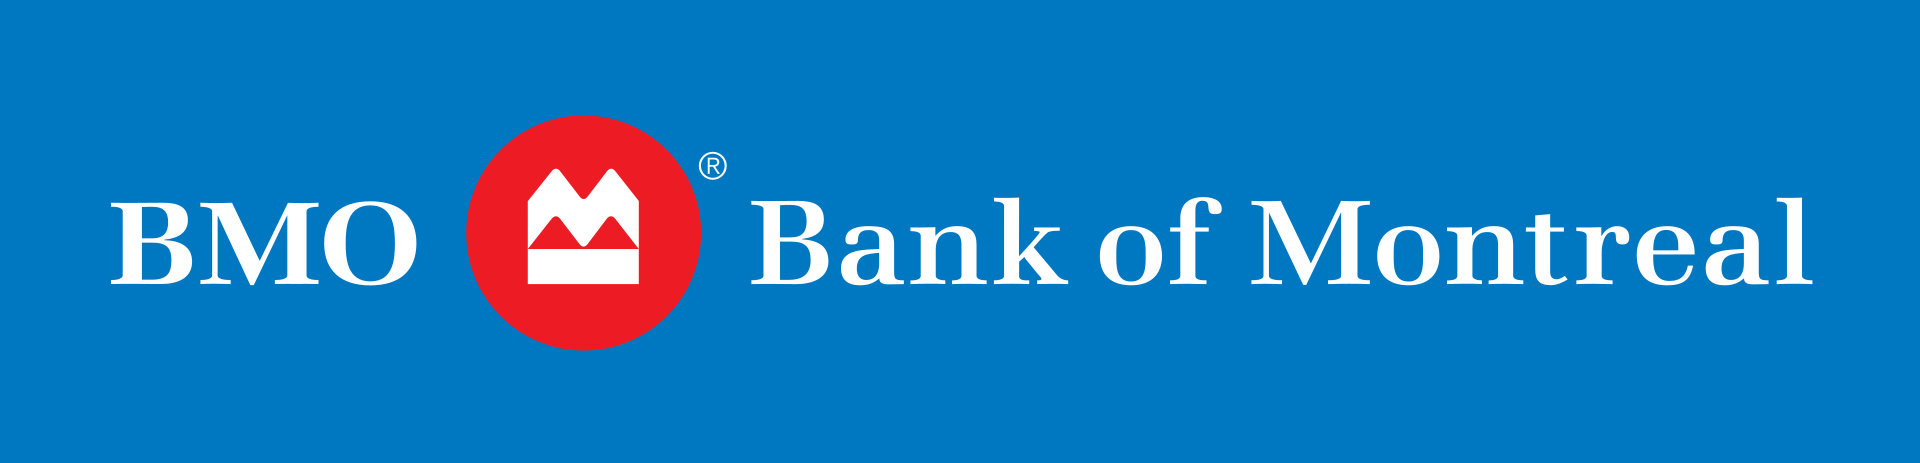 Bank of Montreal Logo.svg